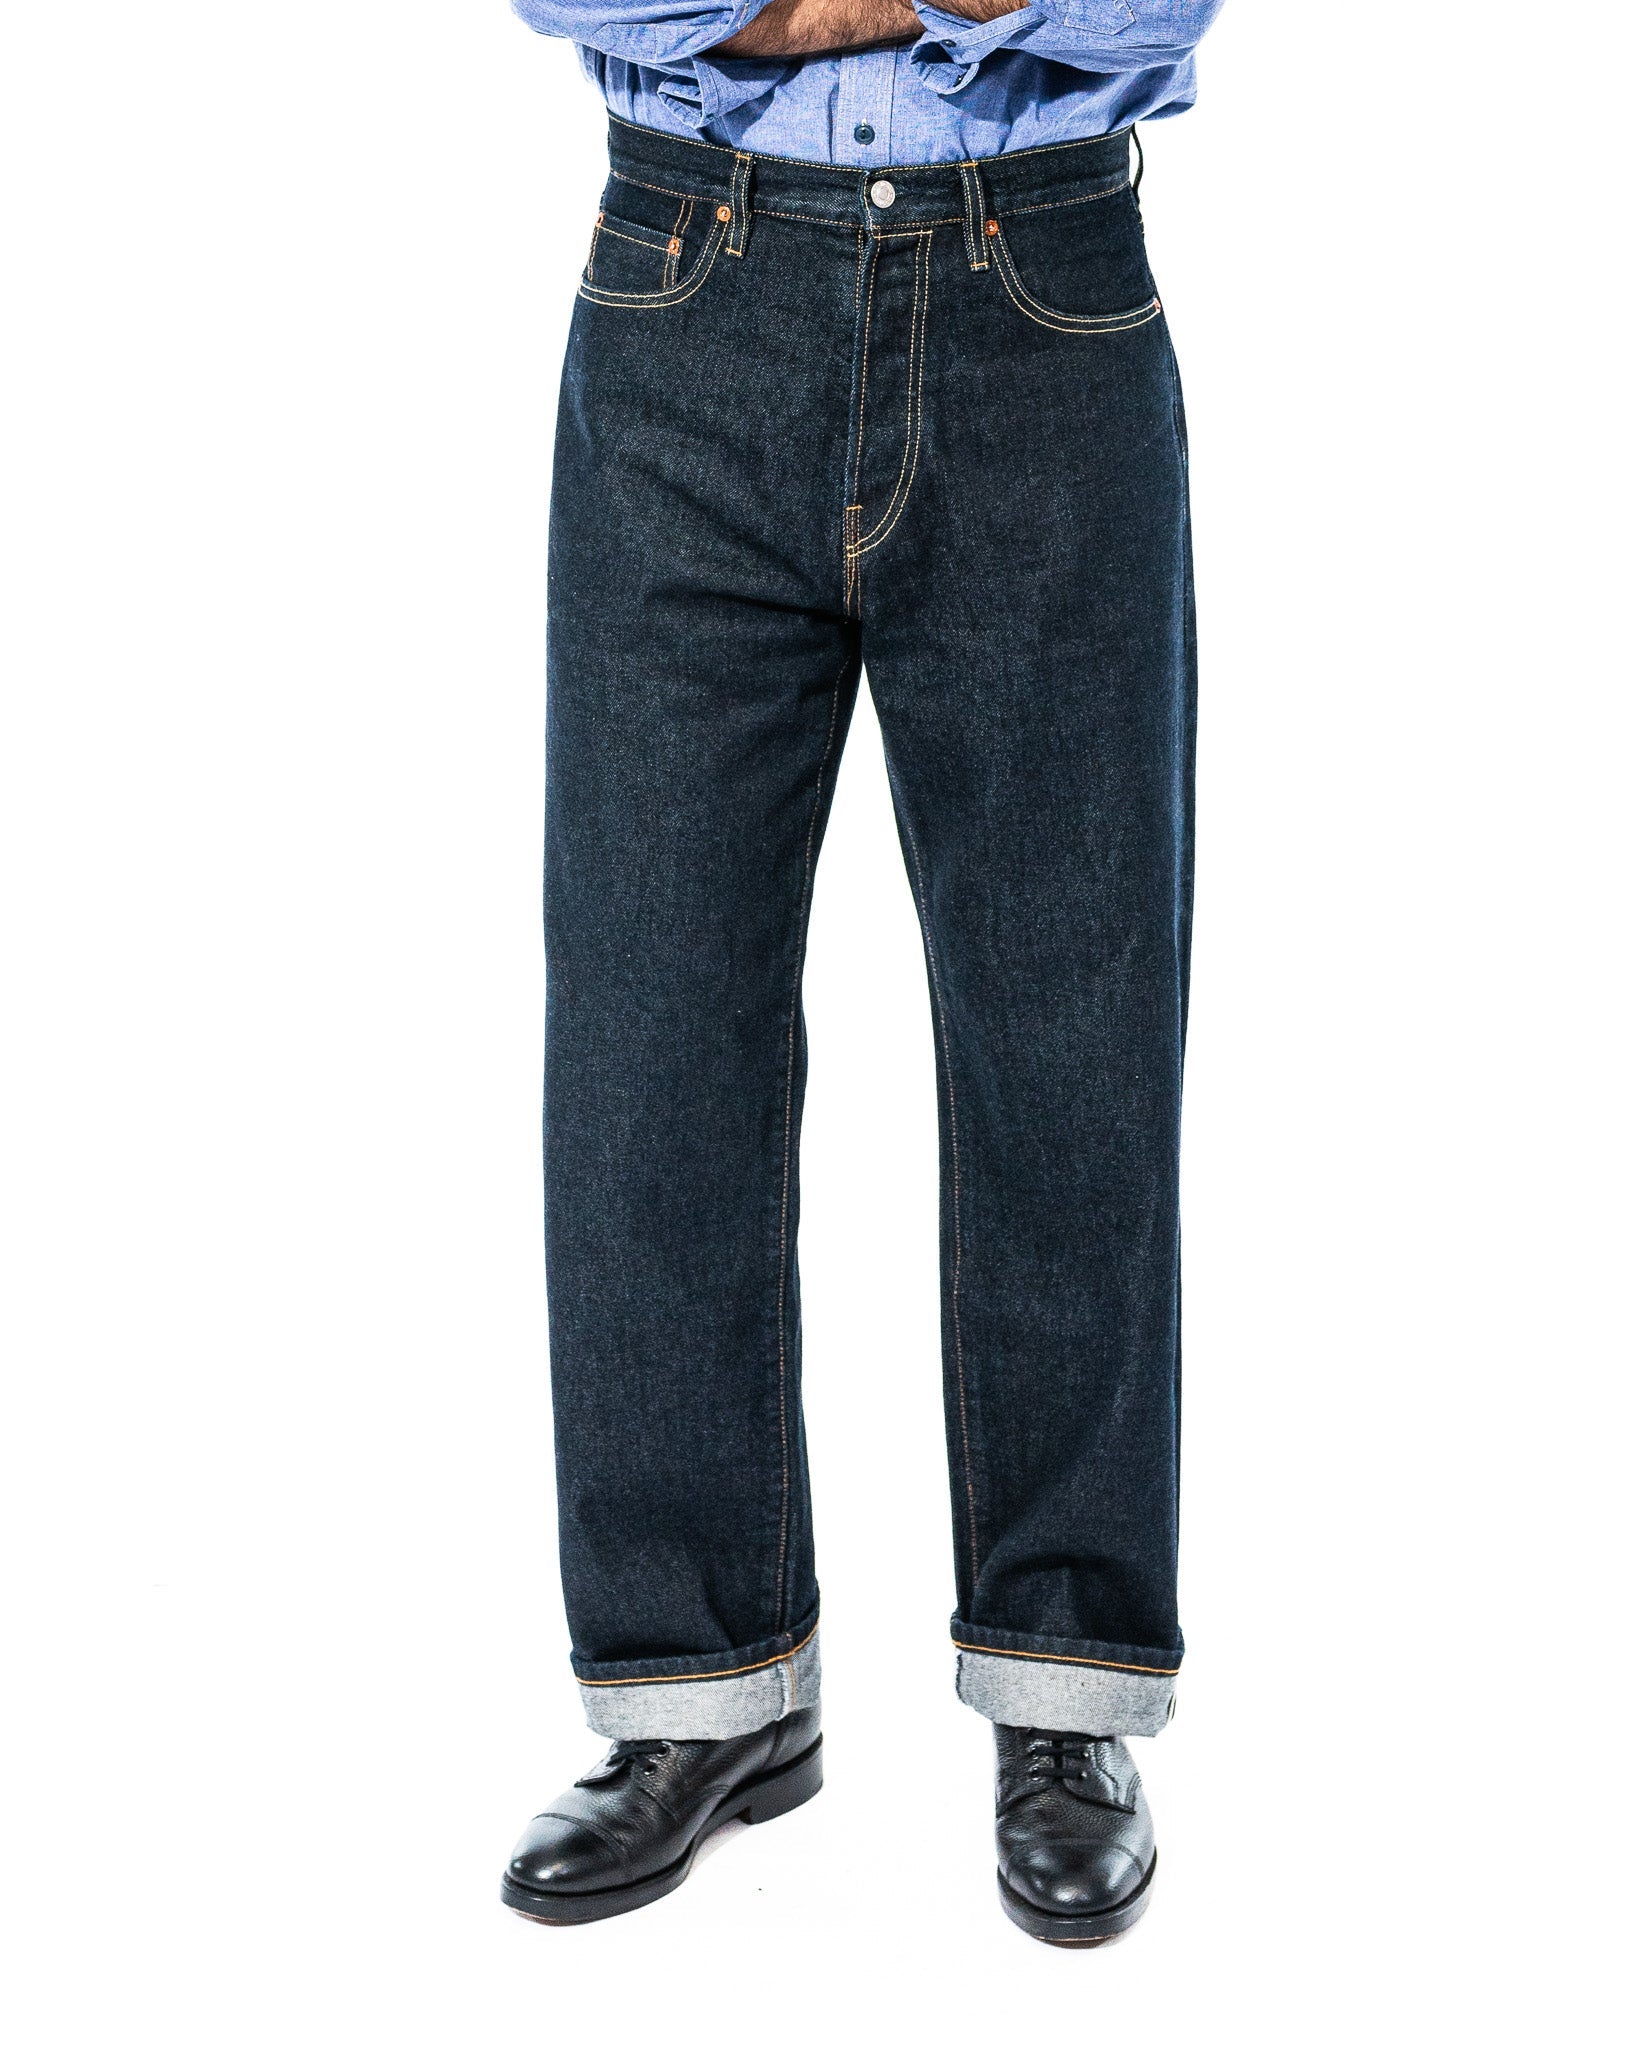 Sample Brakeman Jeans Size 34